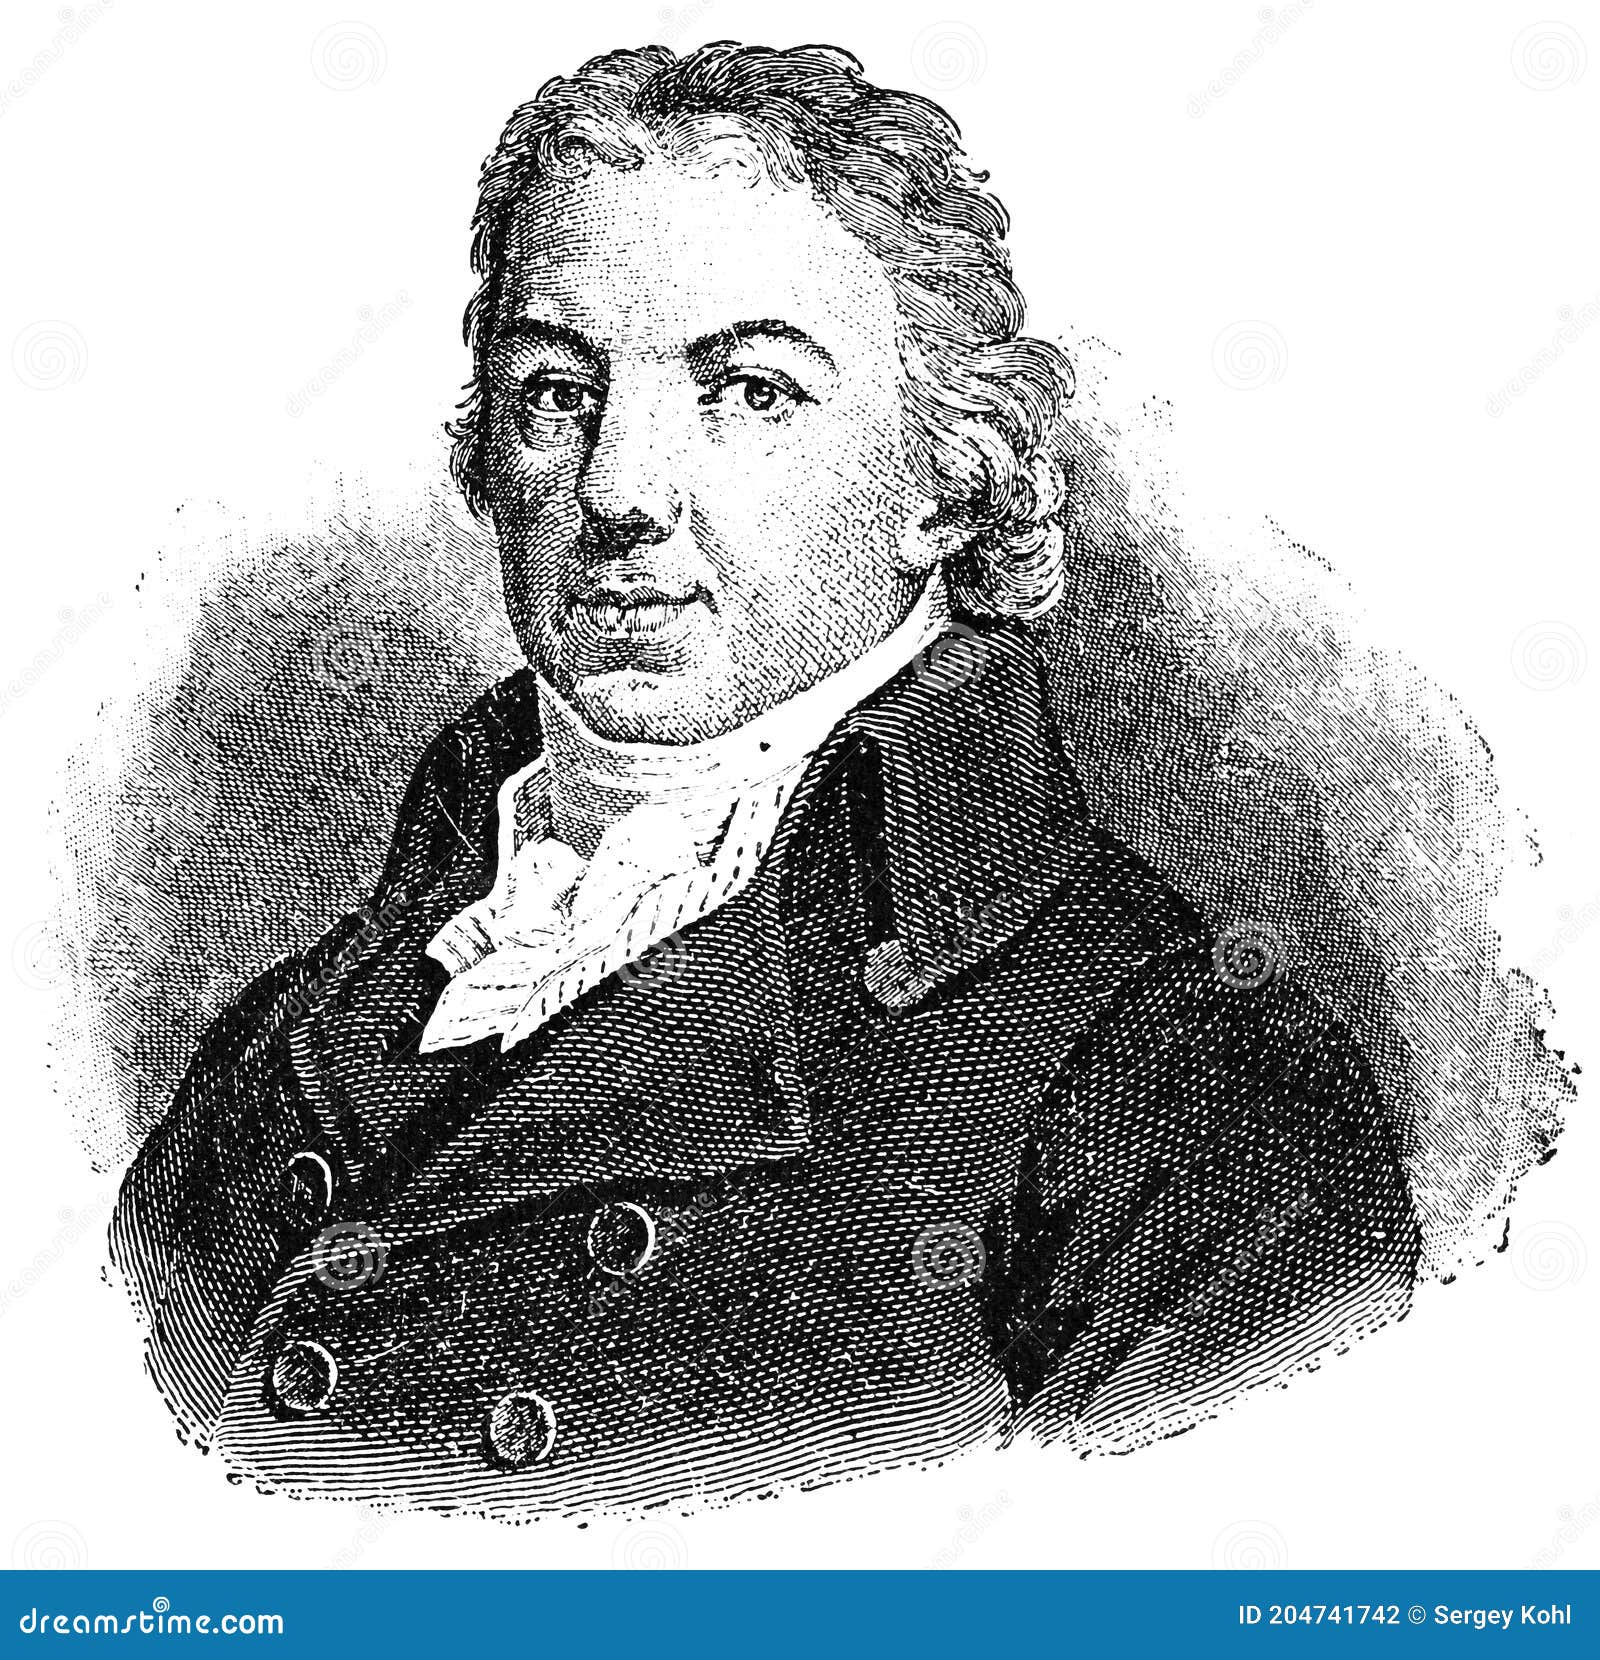 Дженнер вакцина. Английского врача э. Дженнера (1749-1823). Дженнер 18 век.